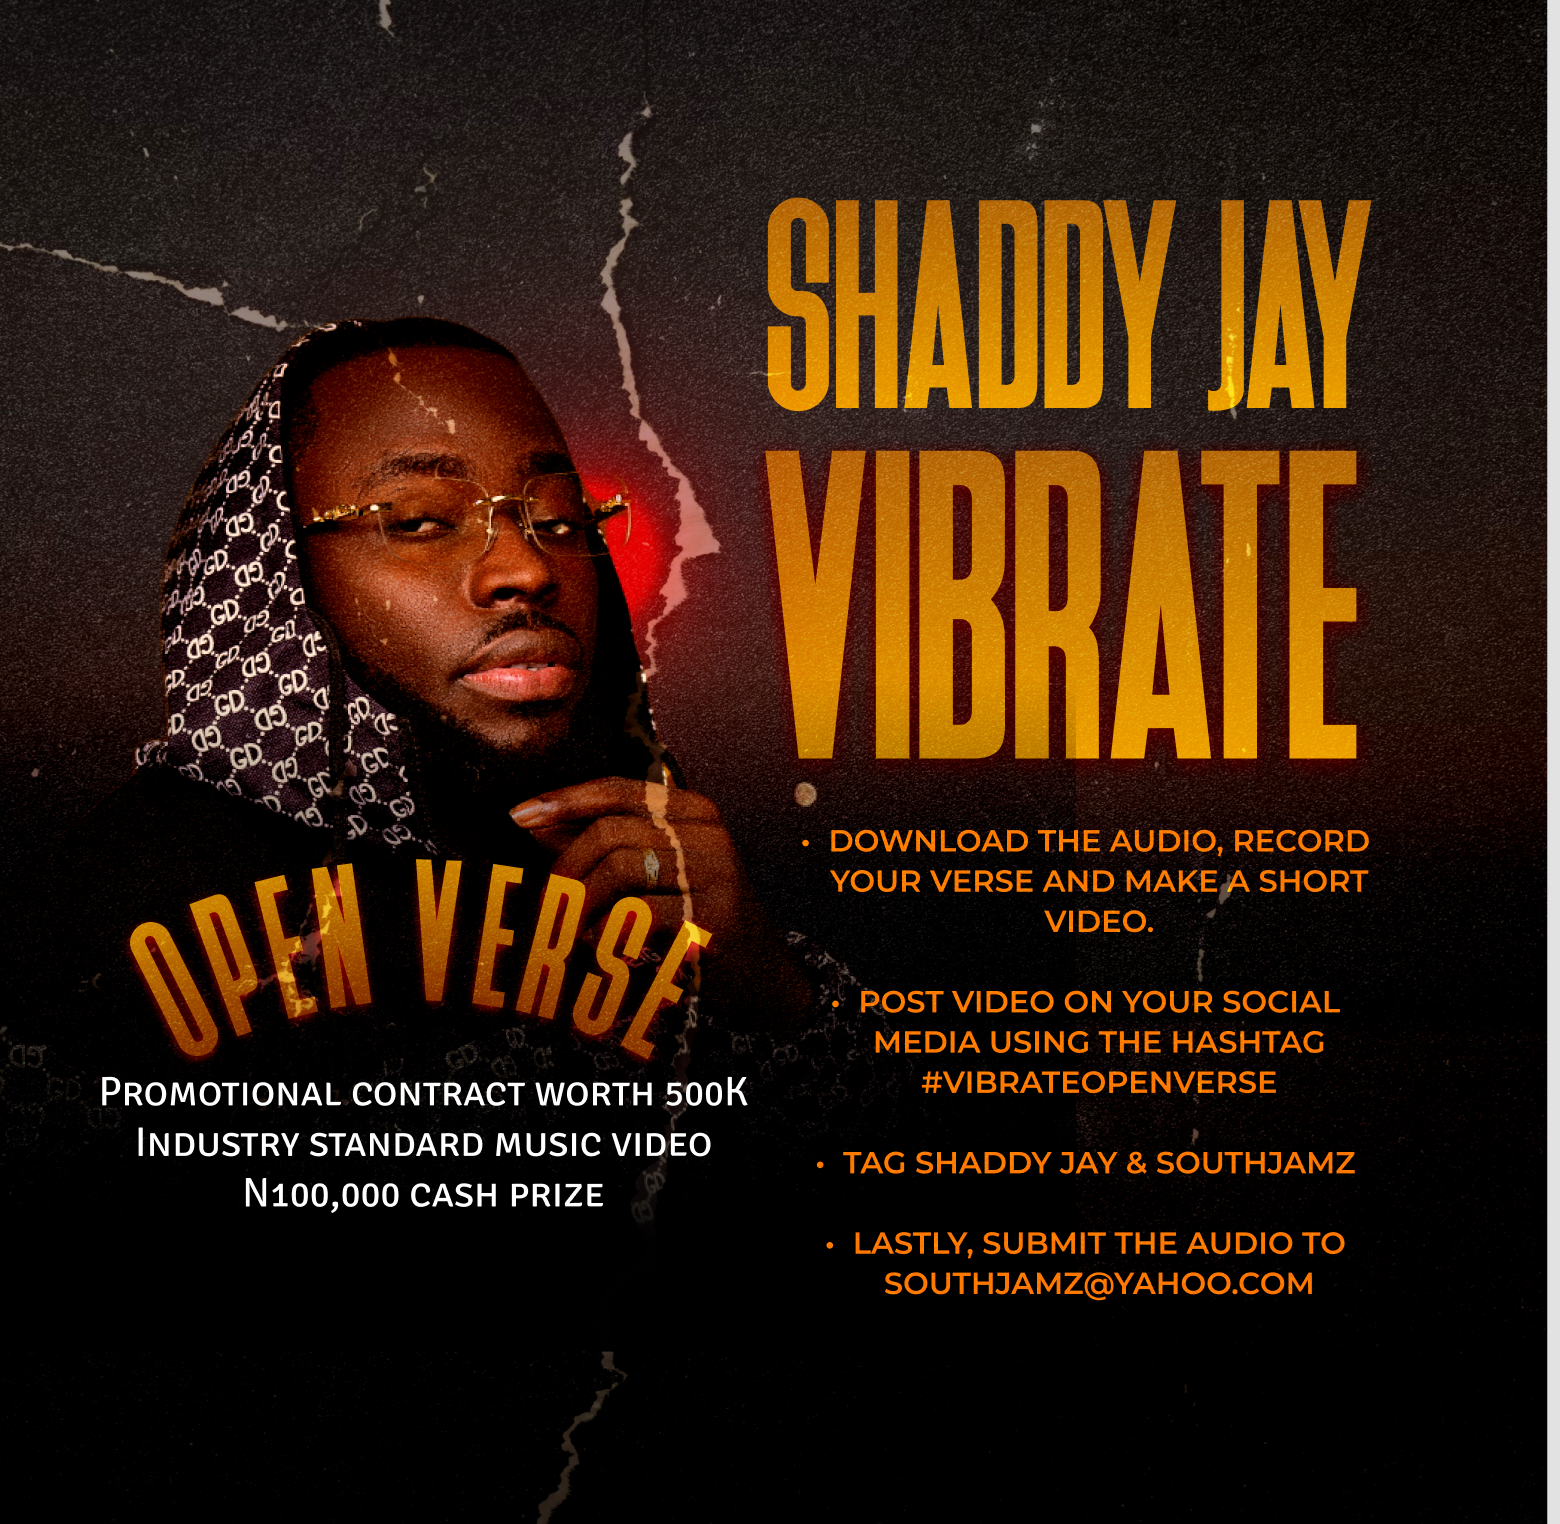 Shaddy Jay vibrate open verse